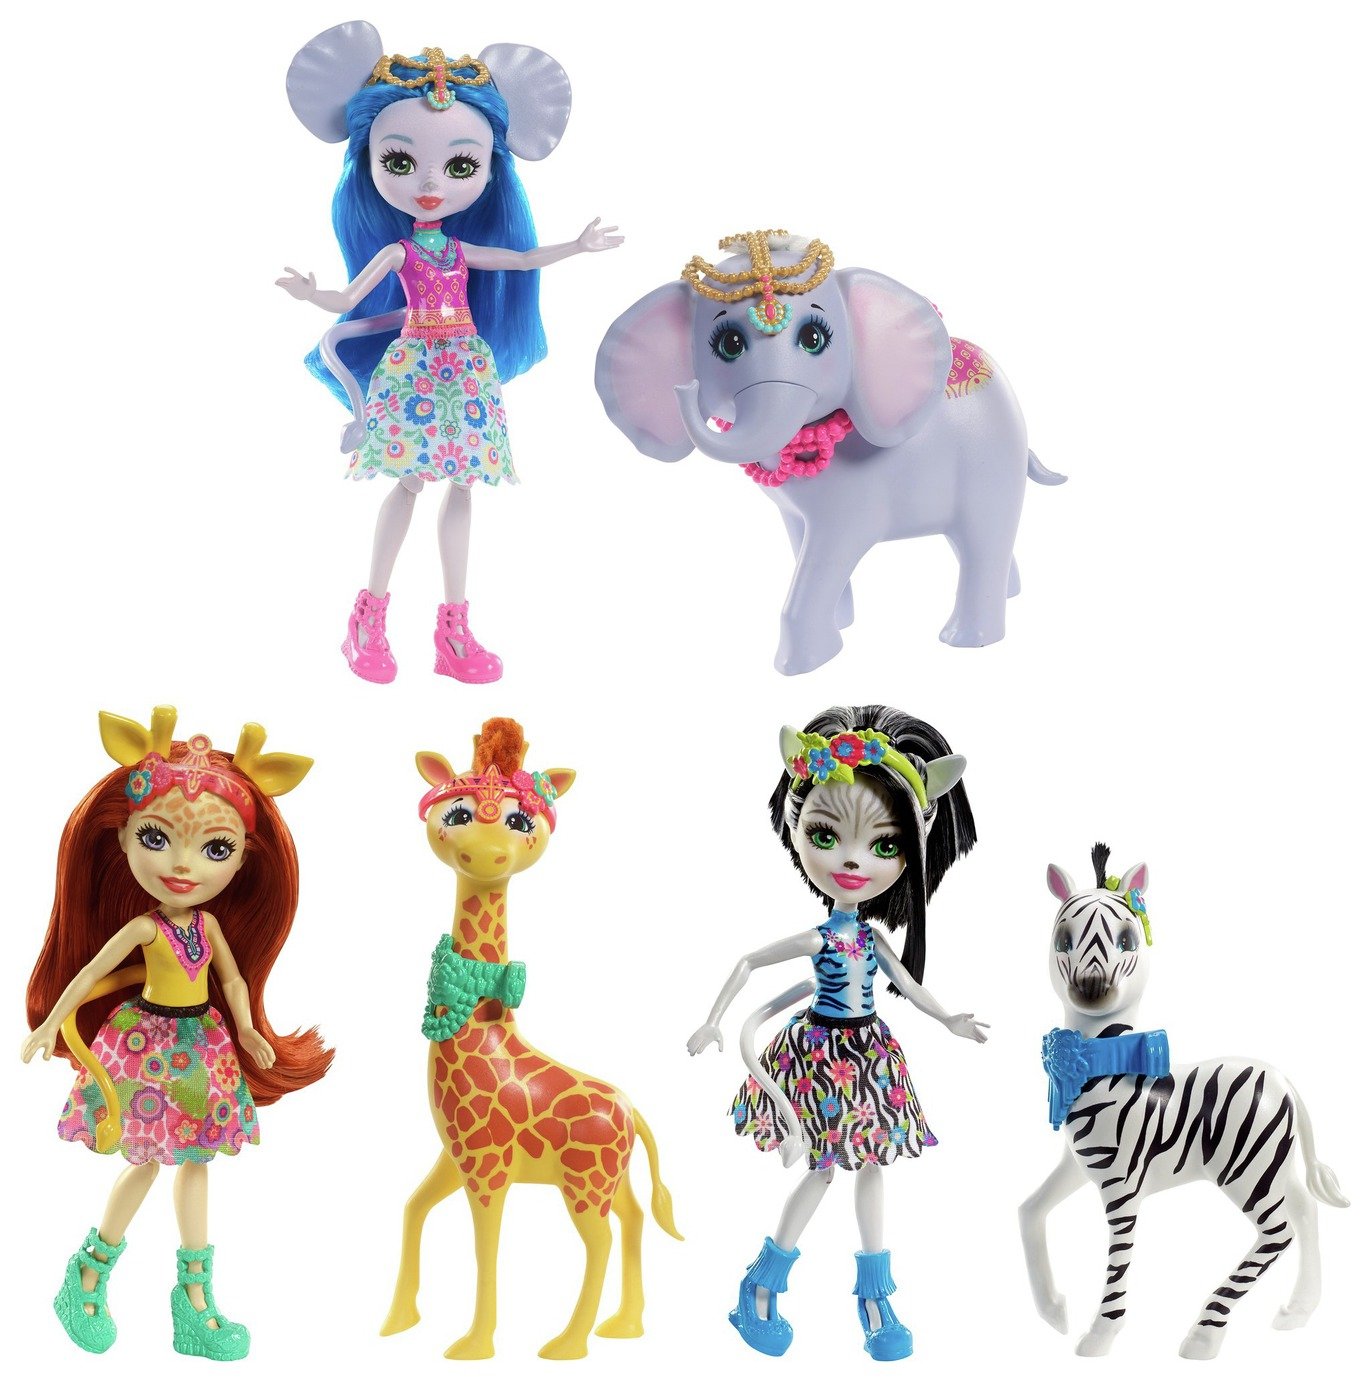 Enchantimals Dolls with Large Animal Figures Assortment